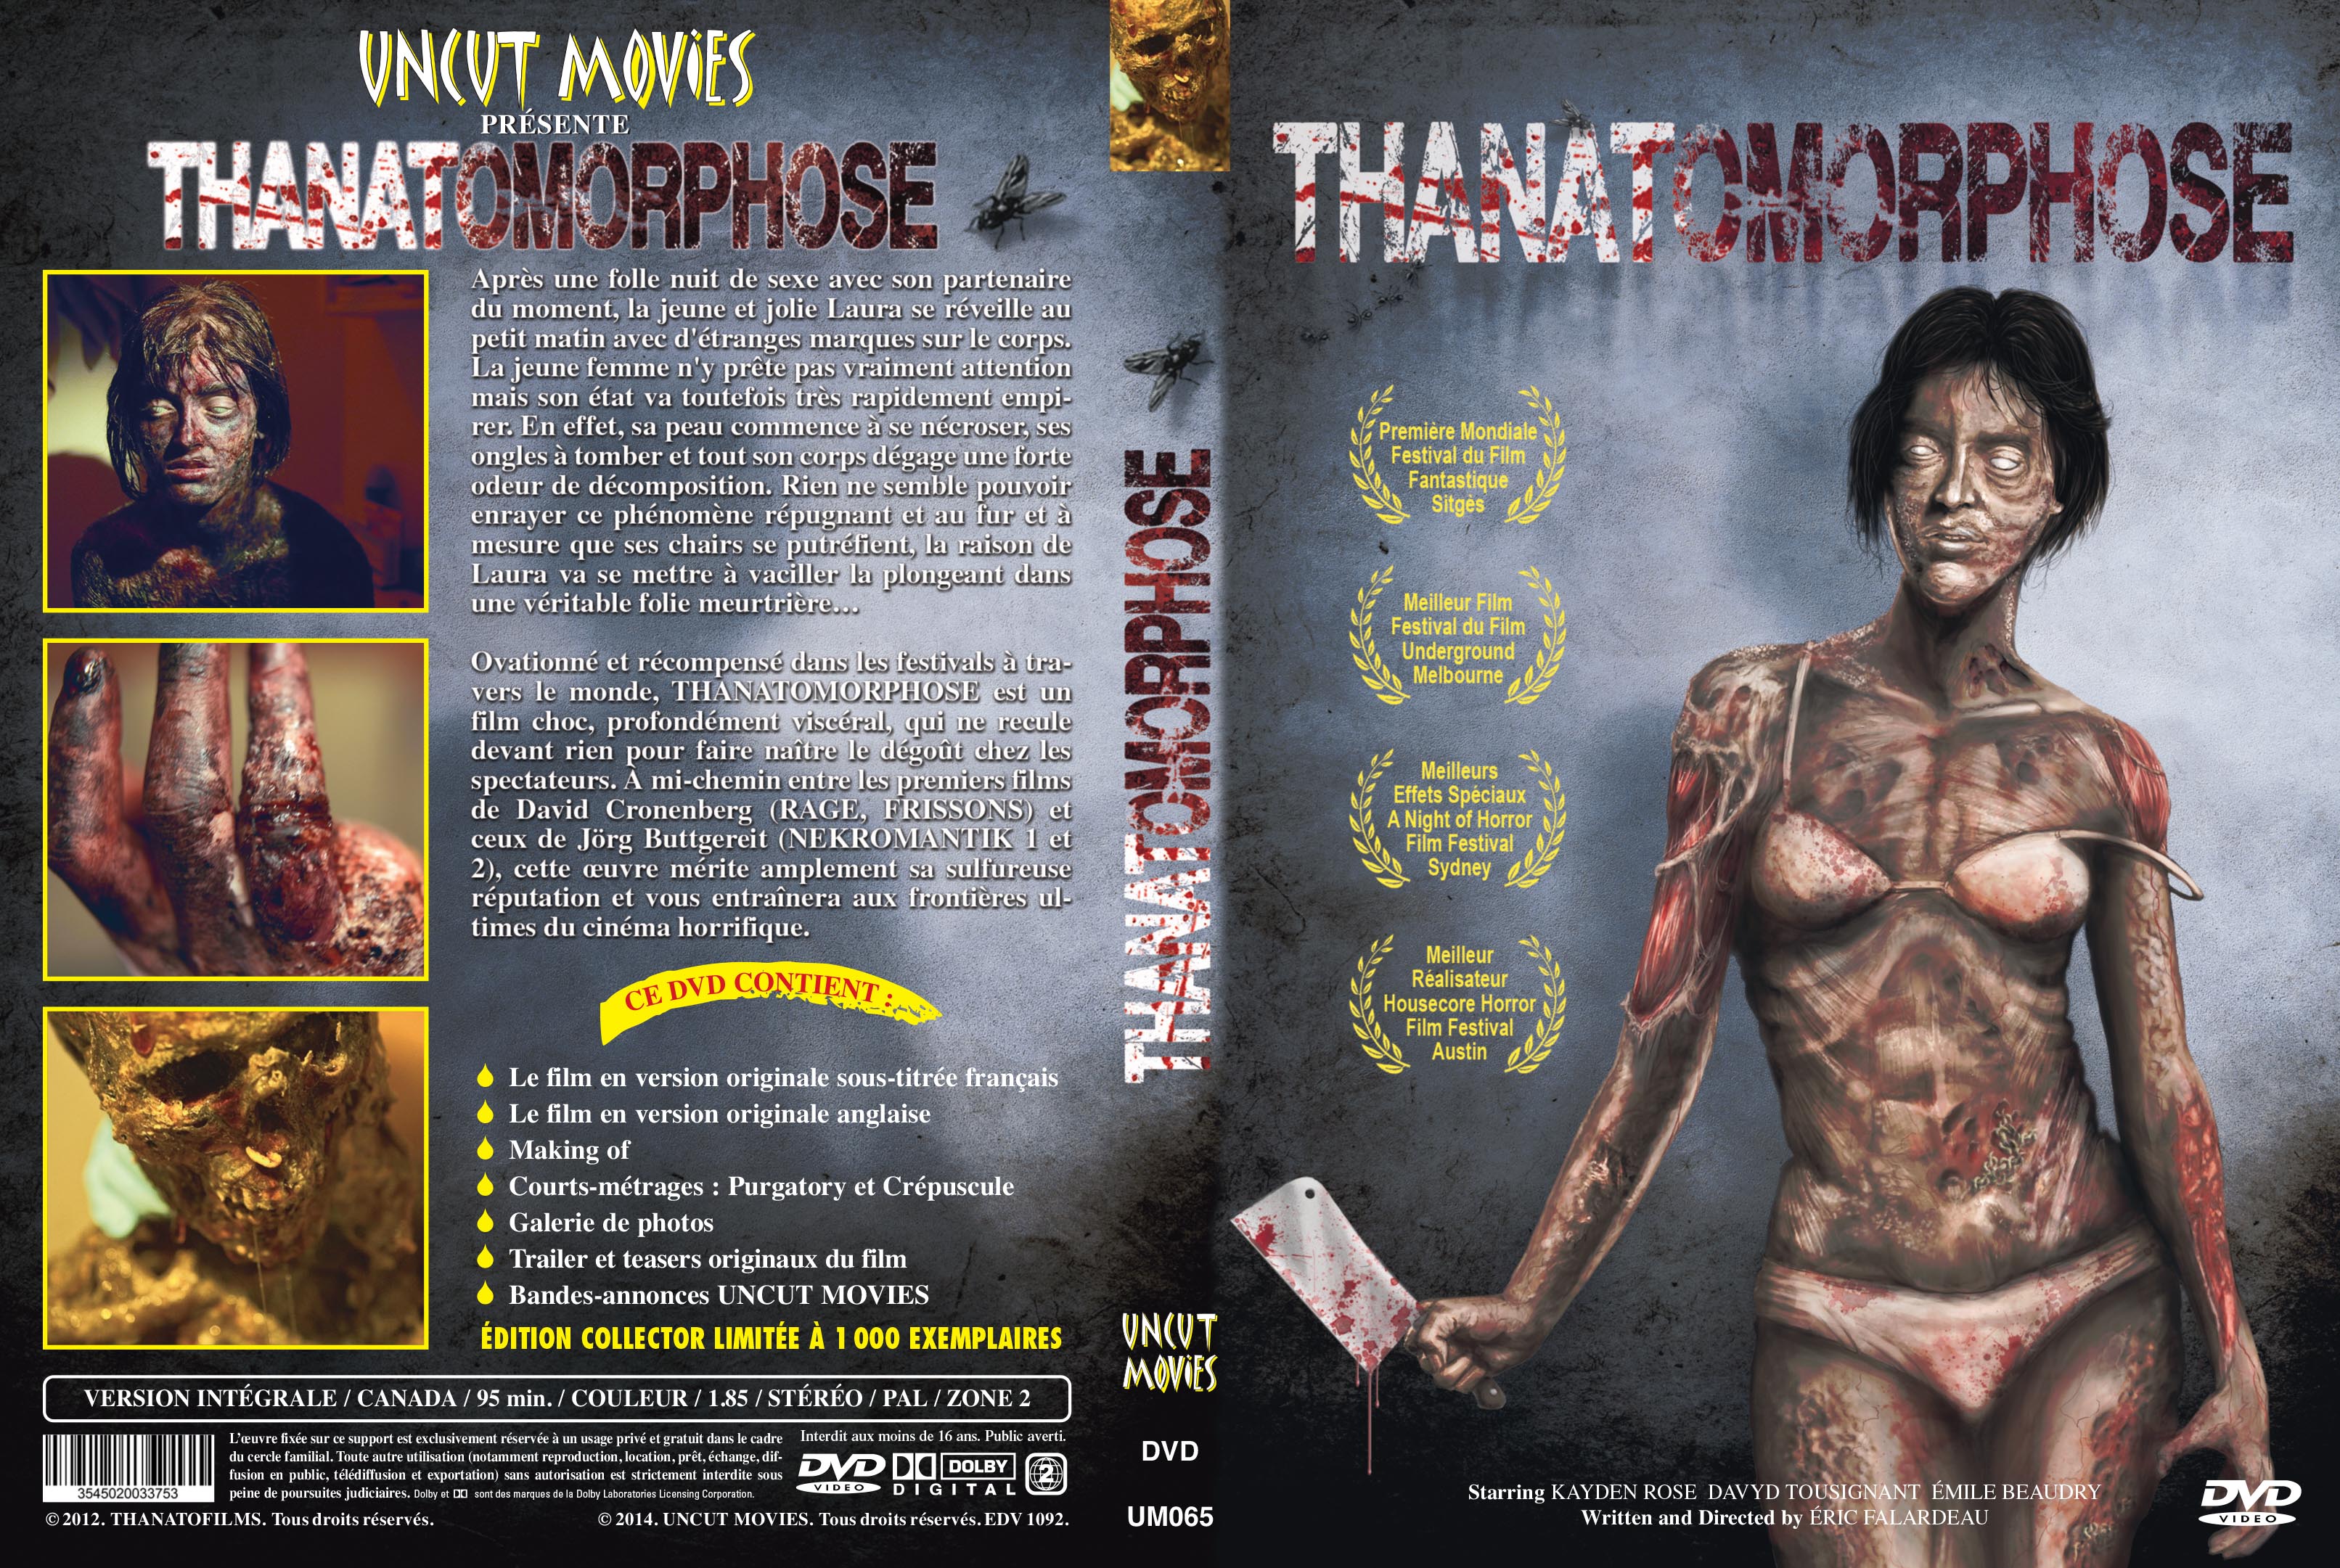 Jaquette DVD Thanatomorphose